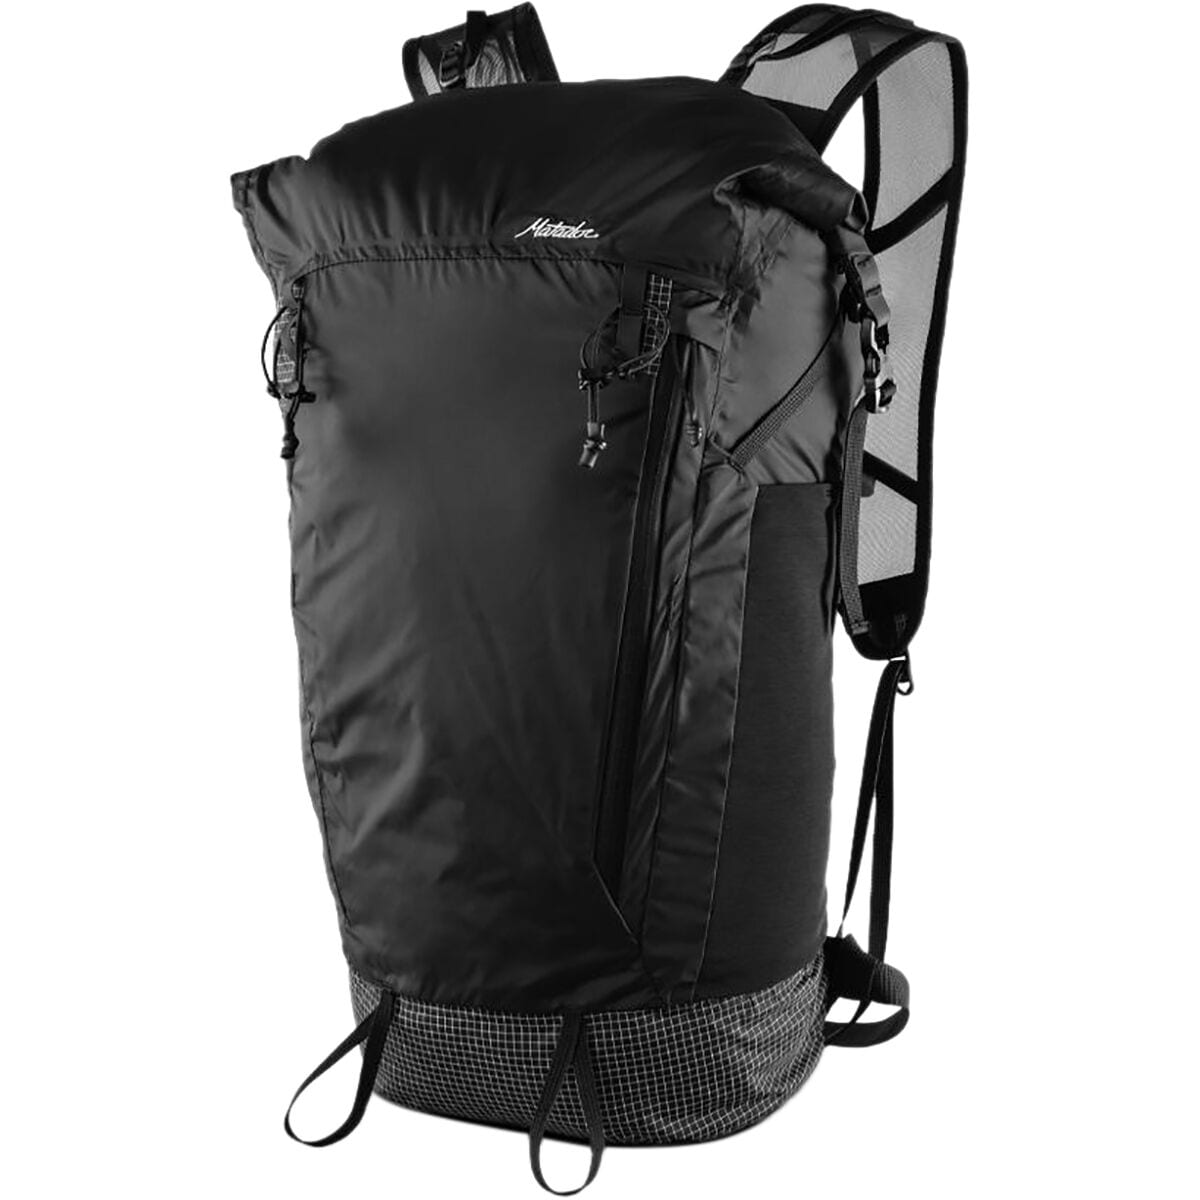 Matador Freerain22 Waterproof Packable 22L Backpack